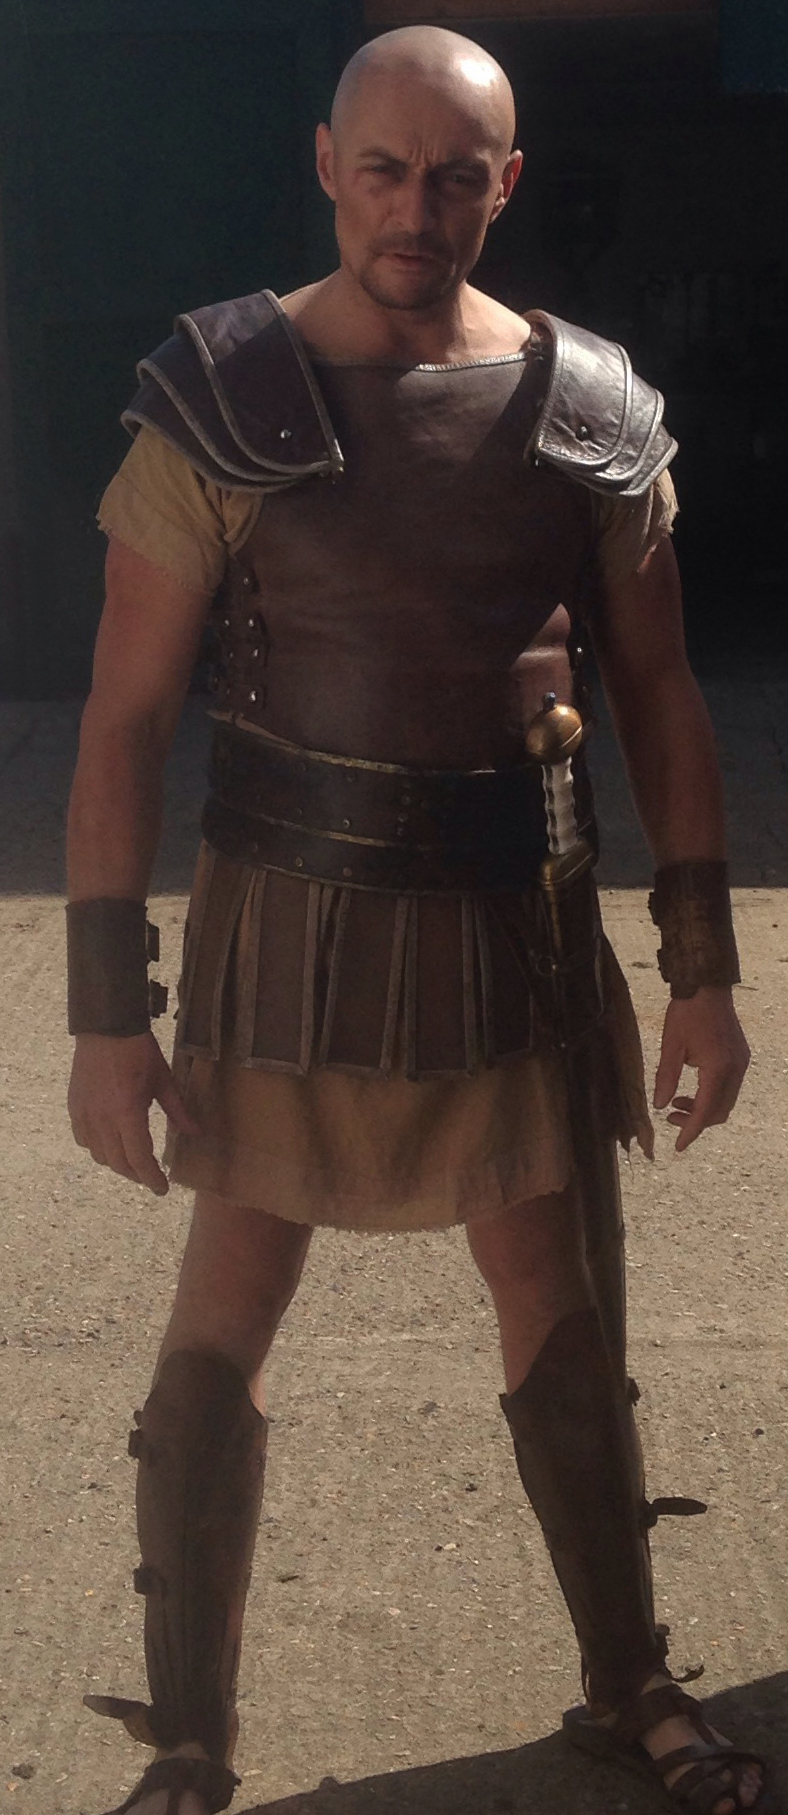 Sean Cronin as The Gladiator